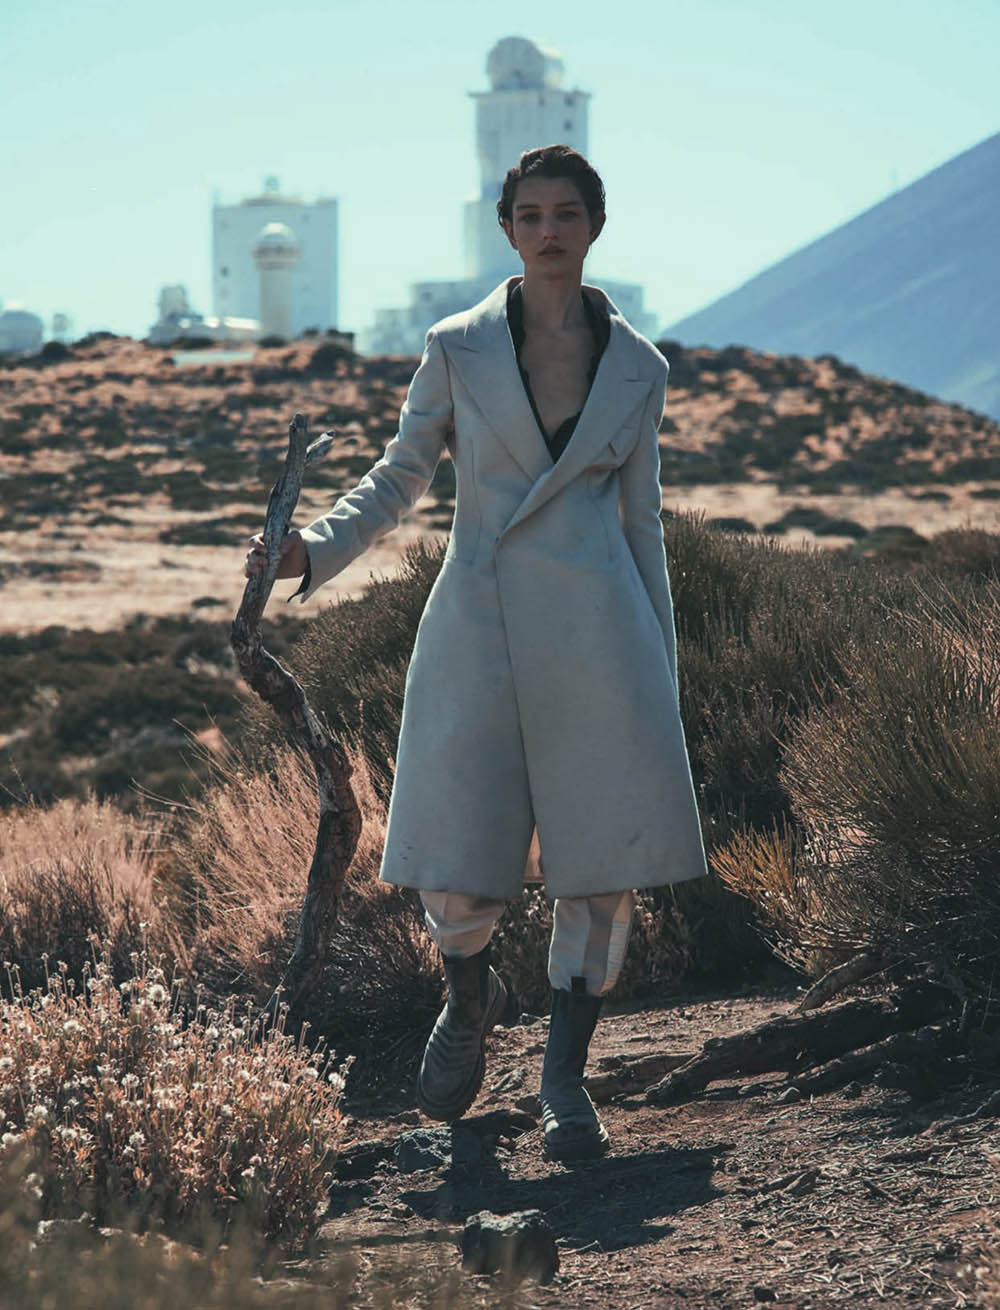 McKenna Hellam covers Harper’s Bazaar Russia November 2019 by Stefano Galuzzi